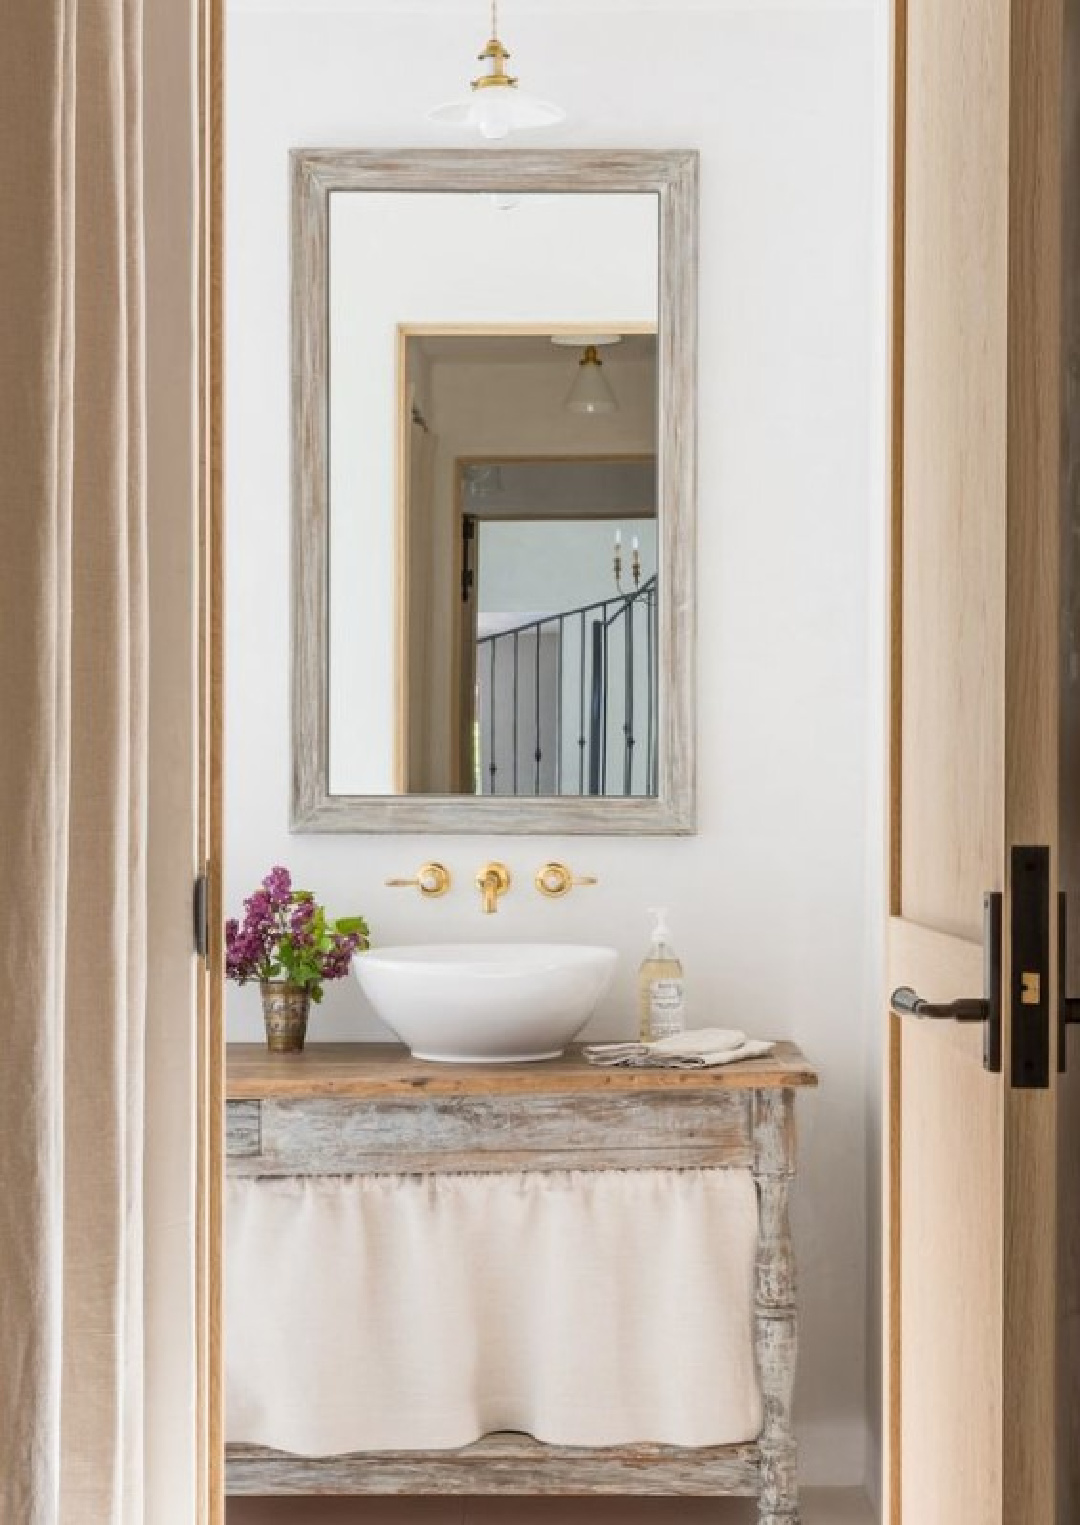 Giannetti Home designed Malibu bathroom with rustic elegance in Luxe Magazine.